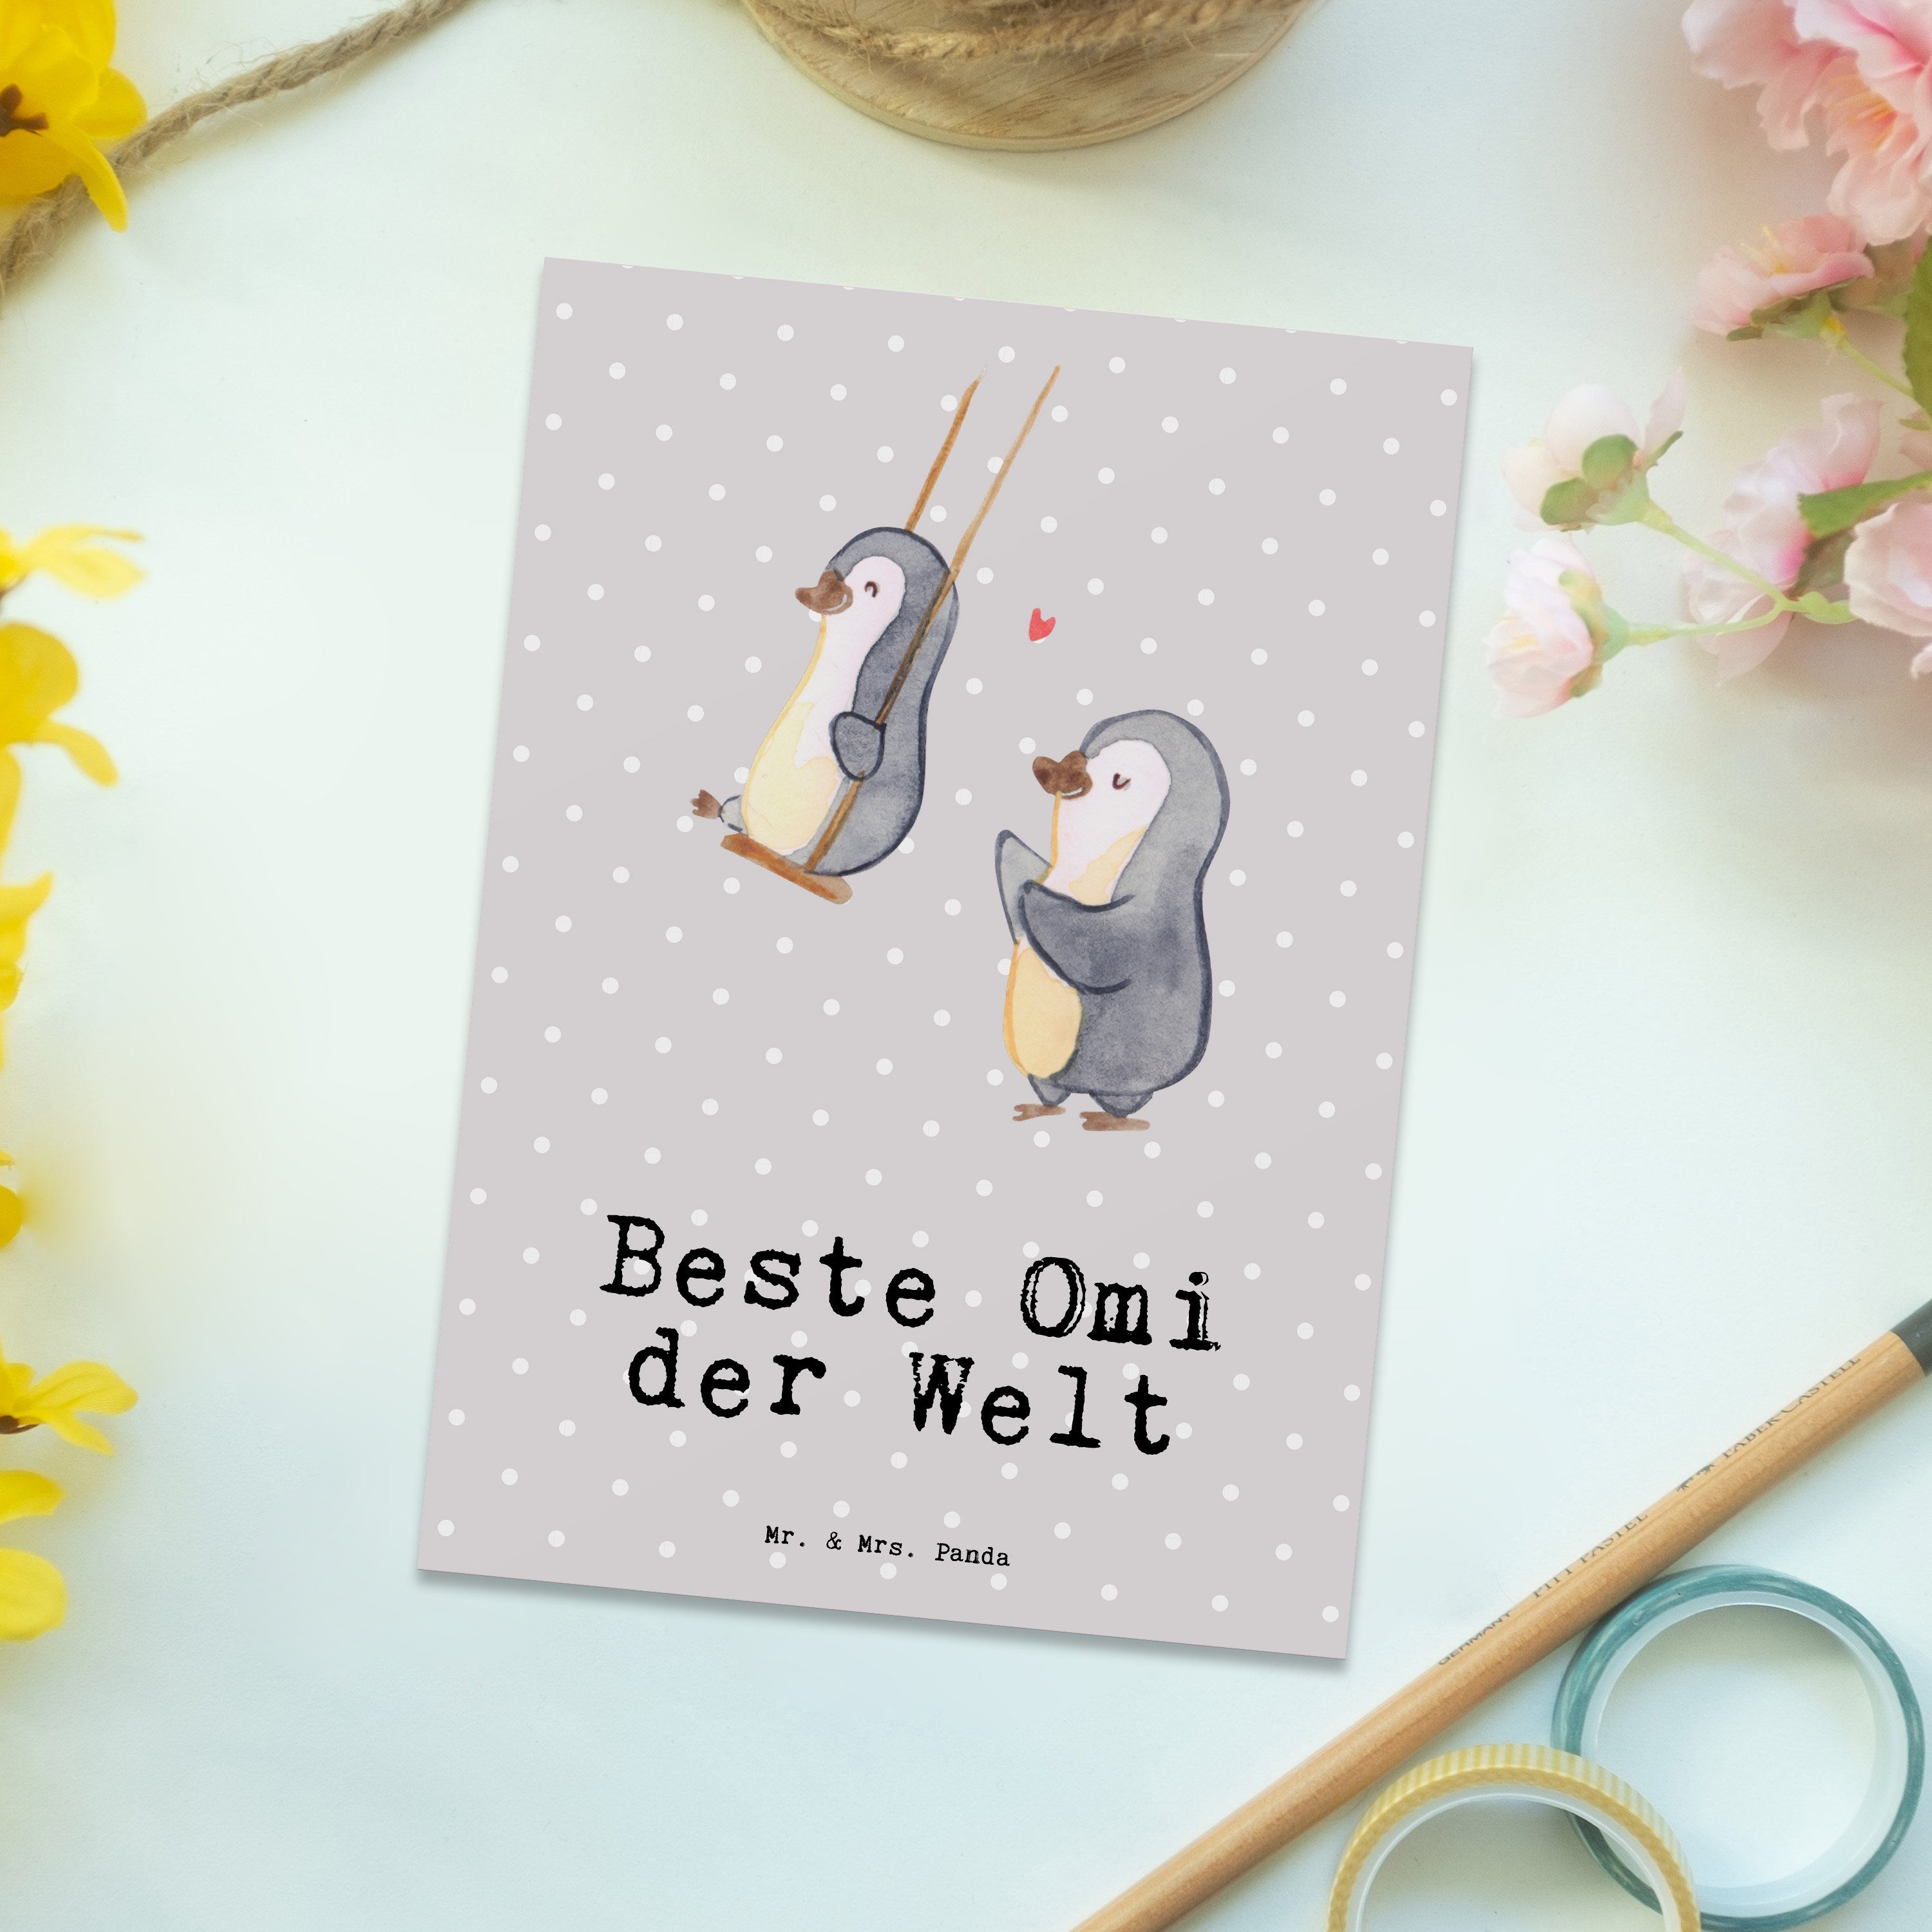 Mrs. Geschenk, - Mr. Grau Pastell Omi Welt der Beste Grußkarte, Dank & Panda Pinguin - Postkarte